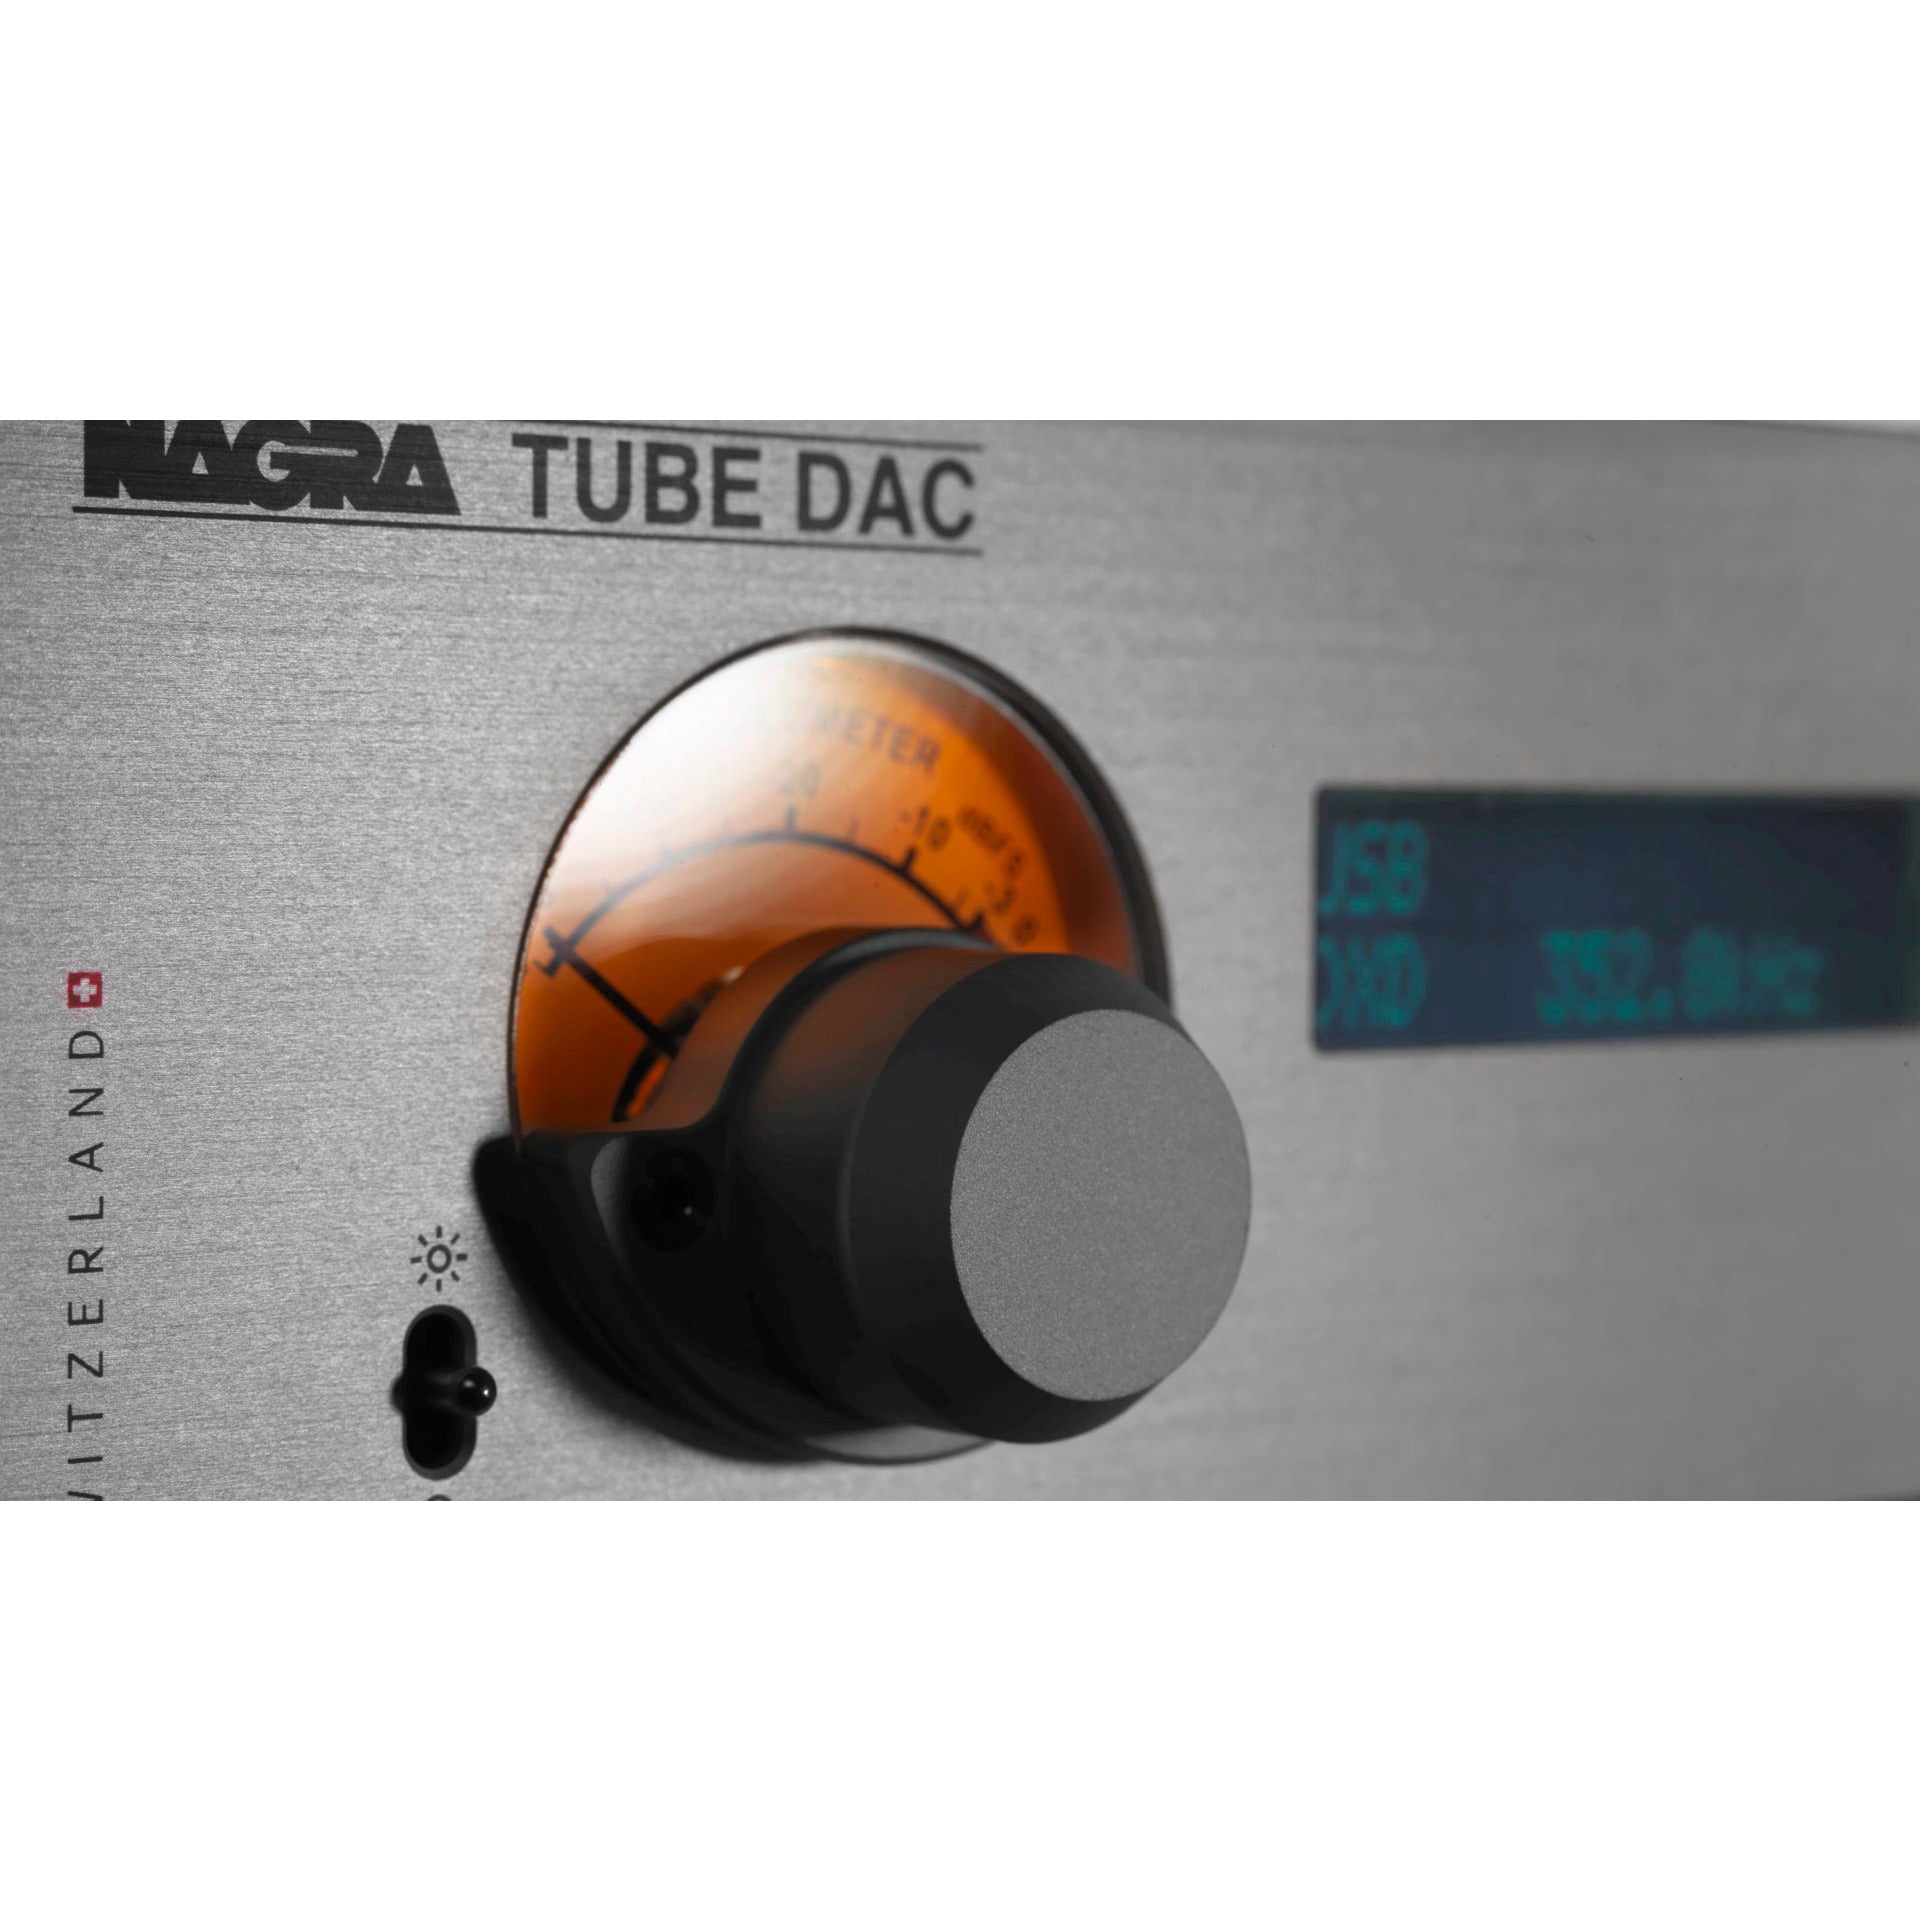 Nagra Classic Tube DAC